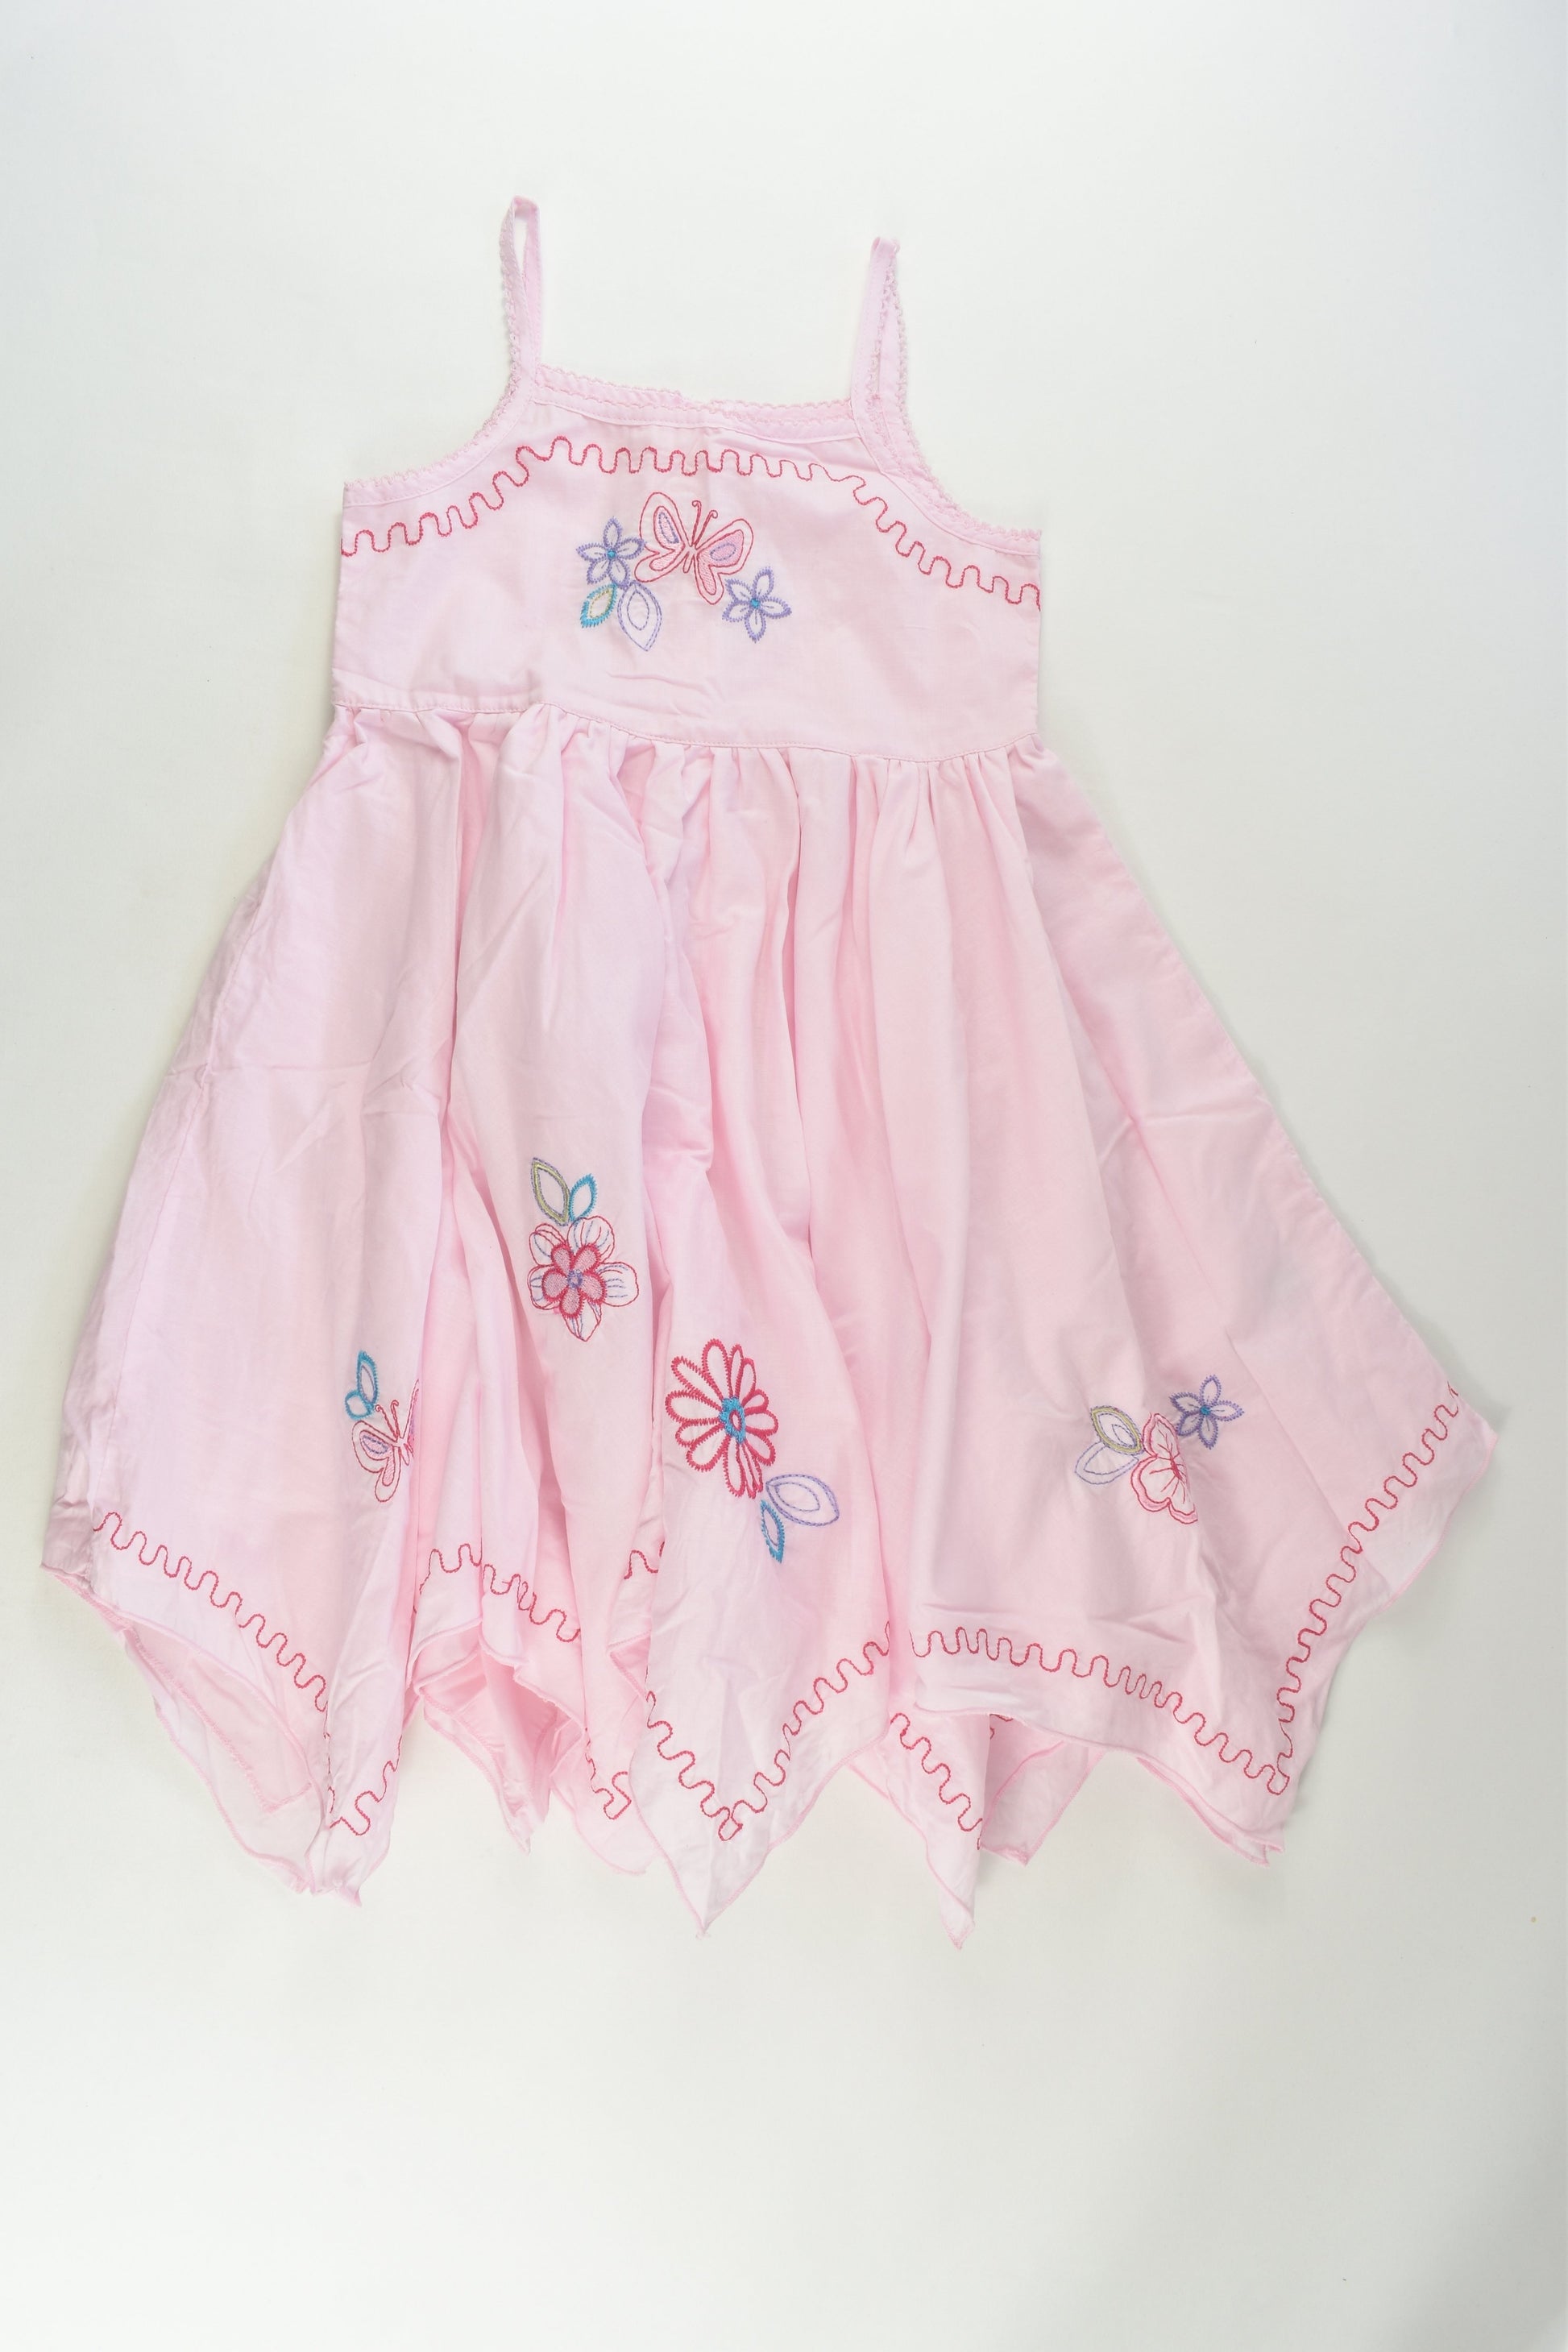 Milkshake Size 3 Lined Butterfly Embroidery Dress